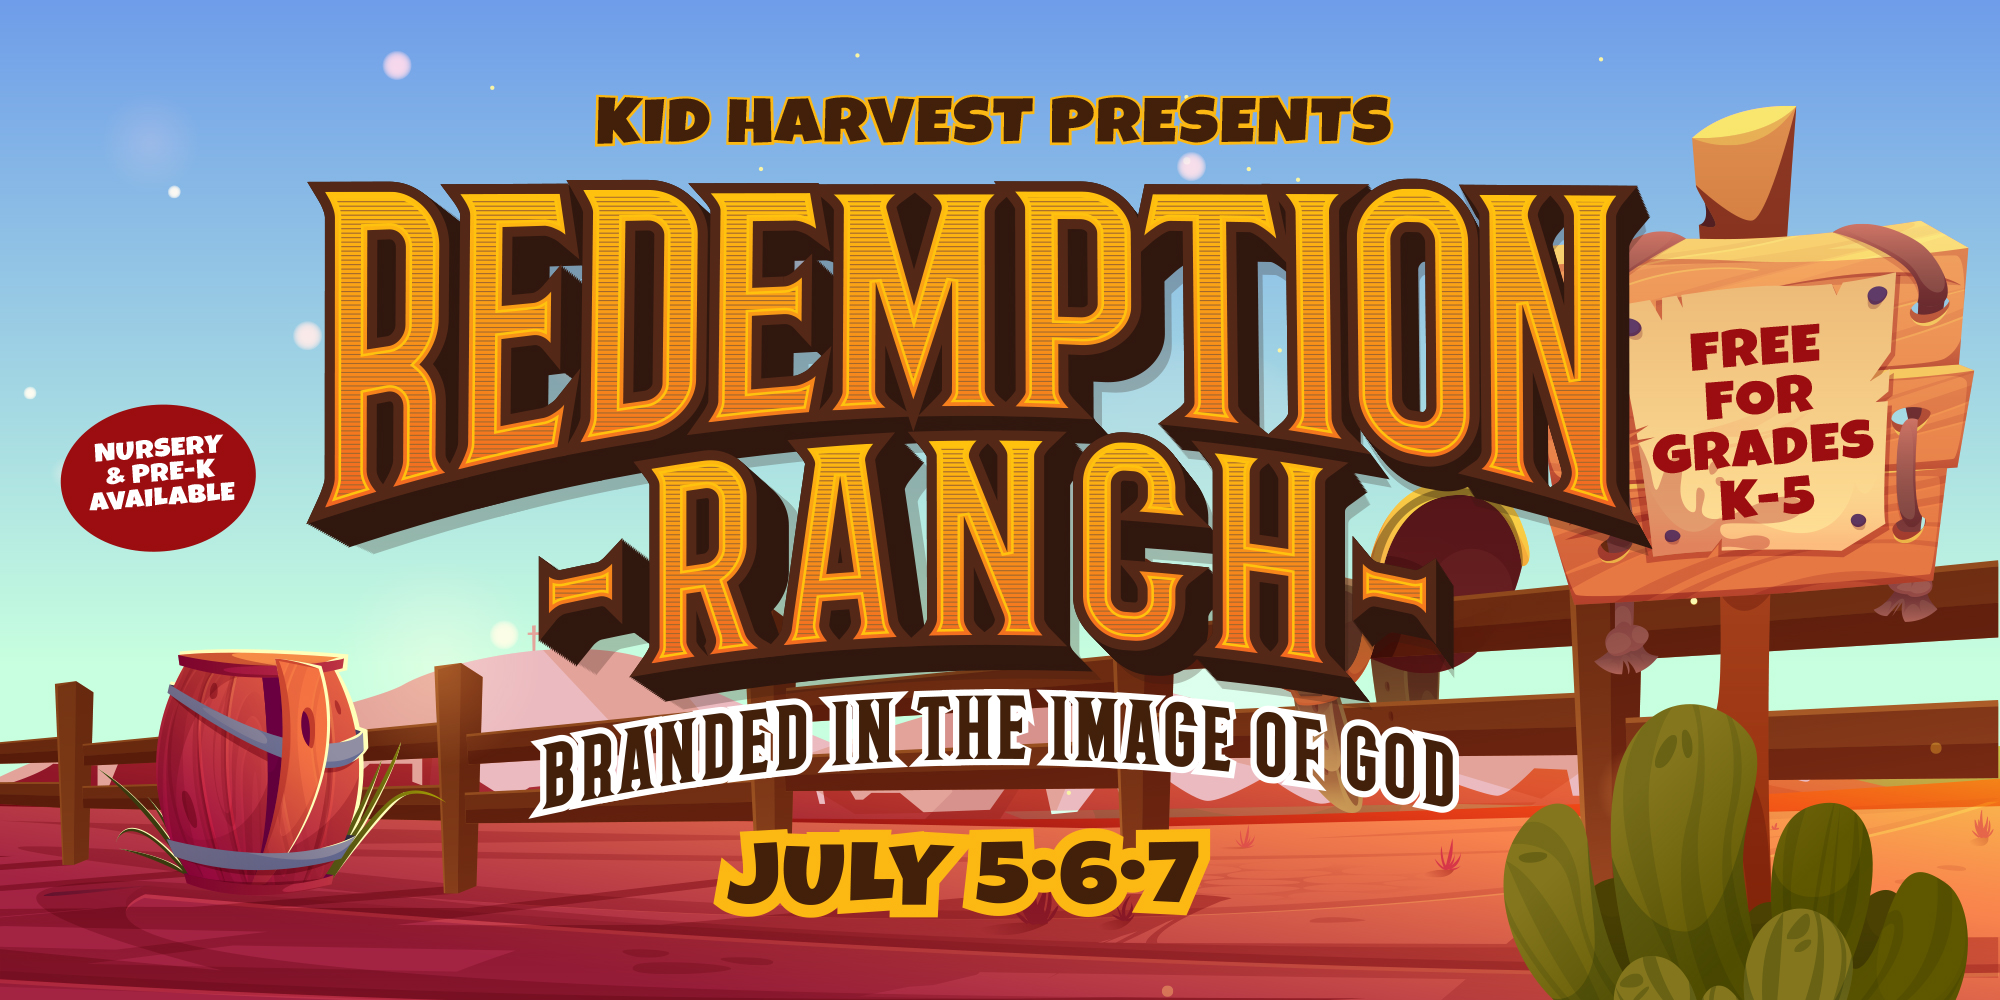 Kid Harvest: Redemption Ranch: Branded in the Image of God!